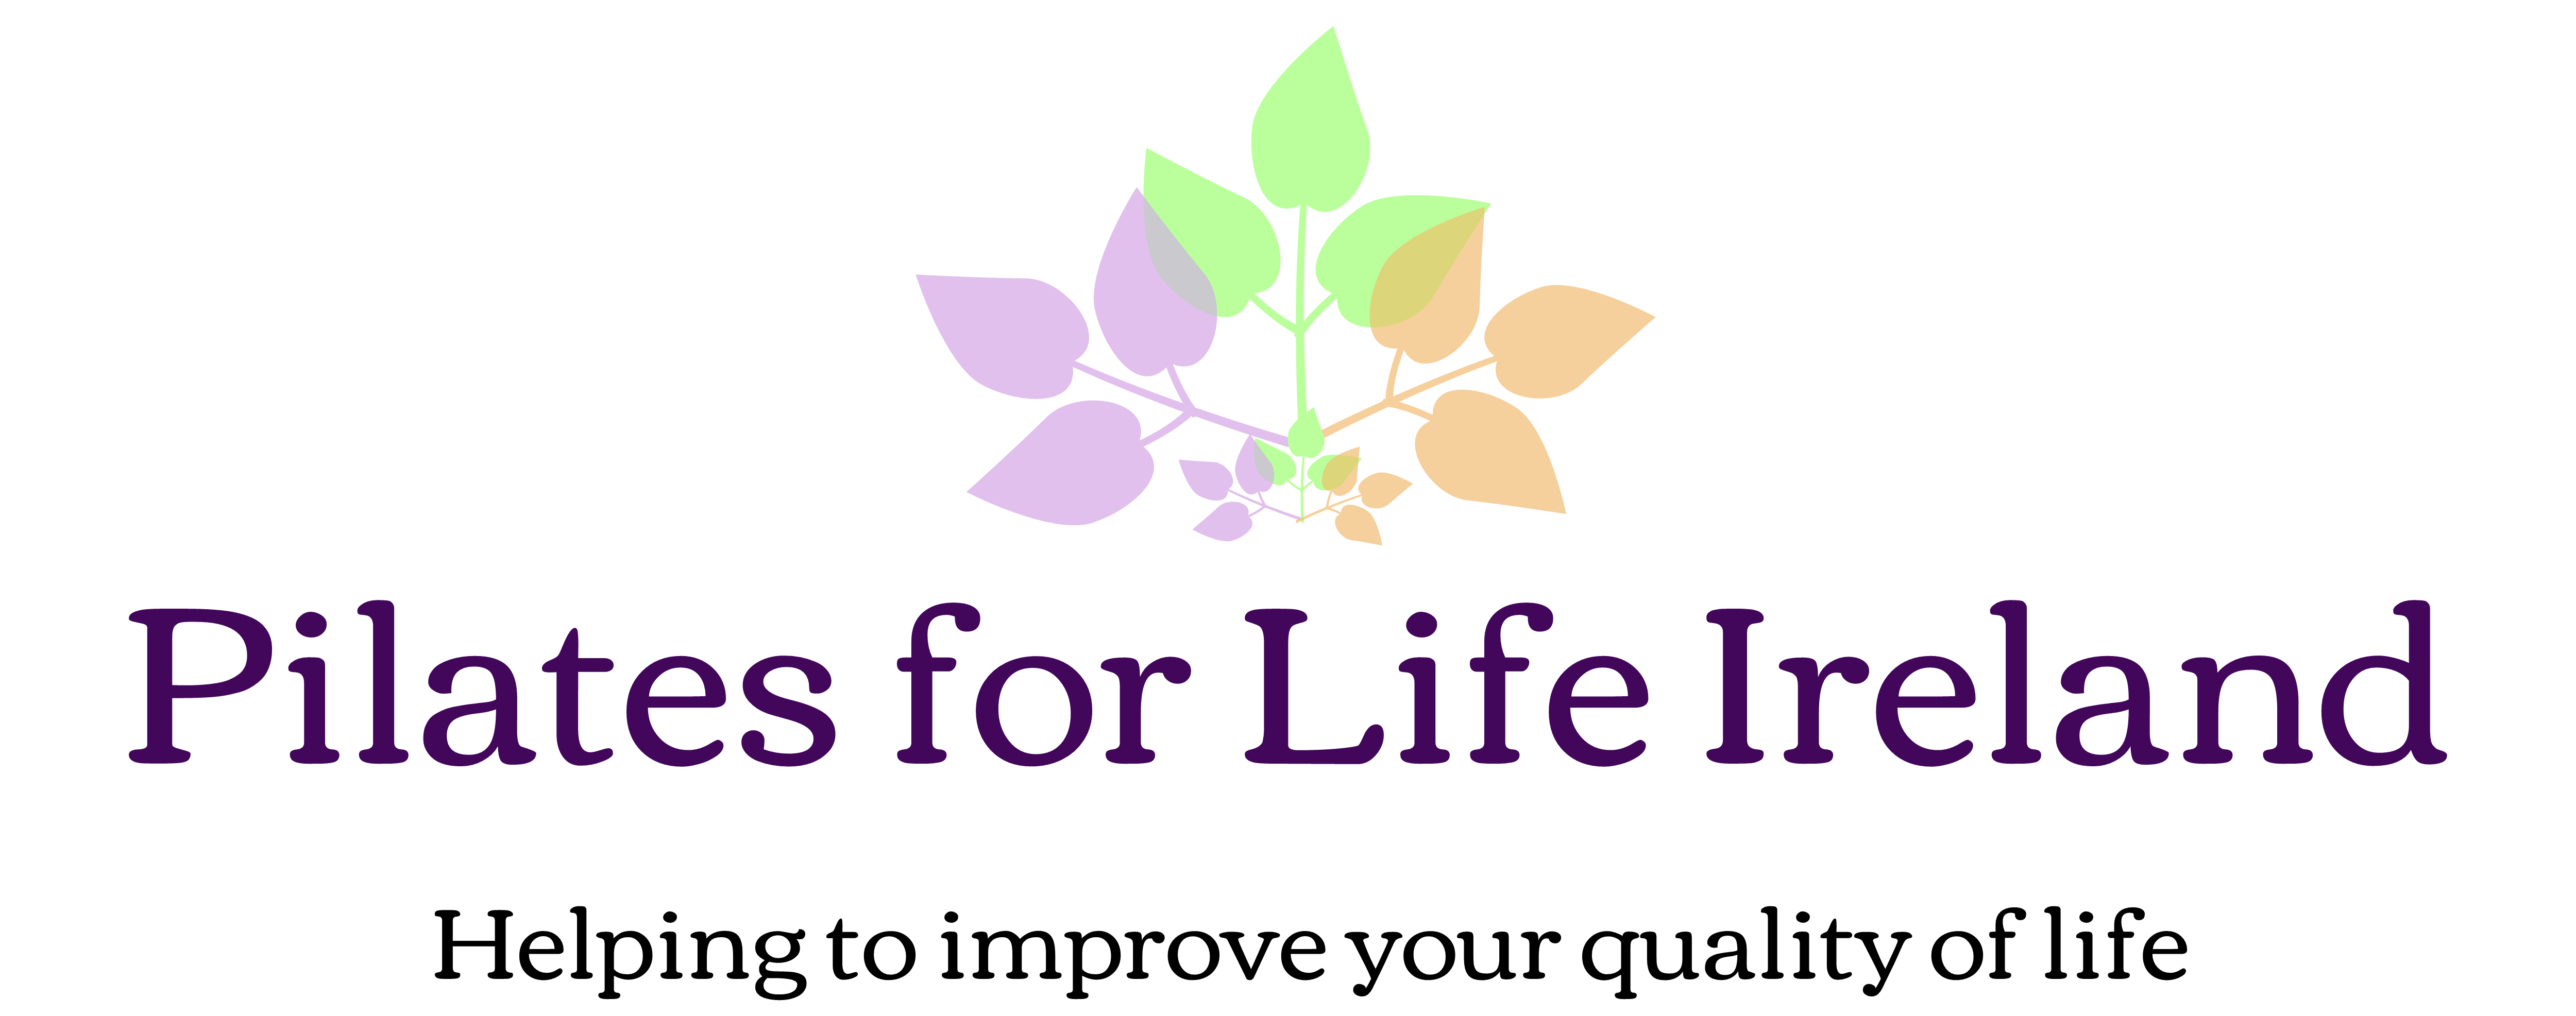 Pilates for Life Ireland Logo